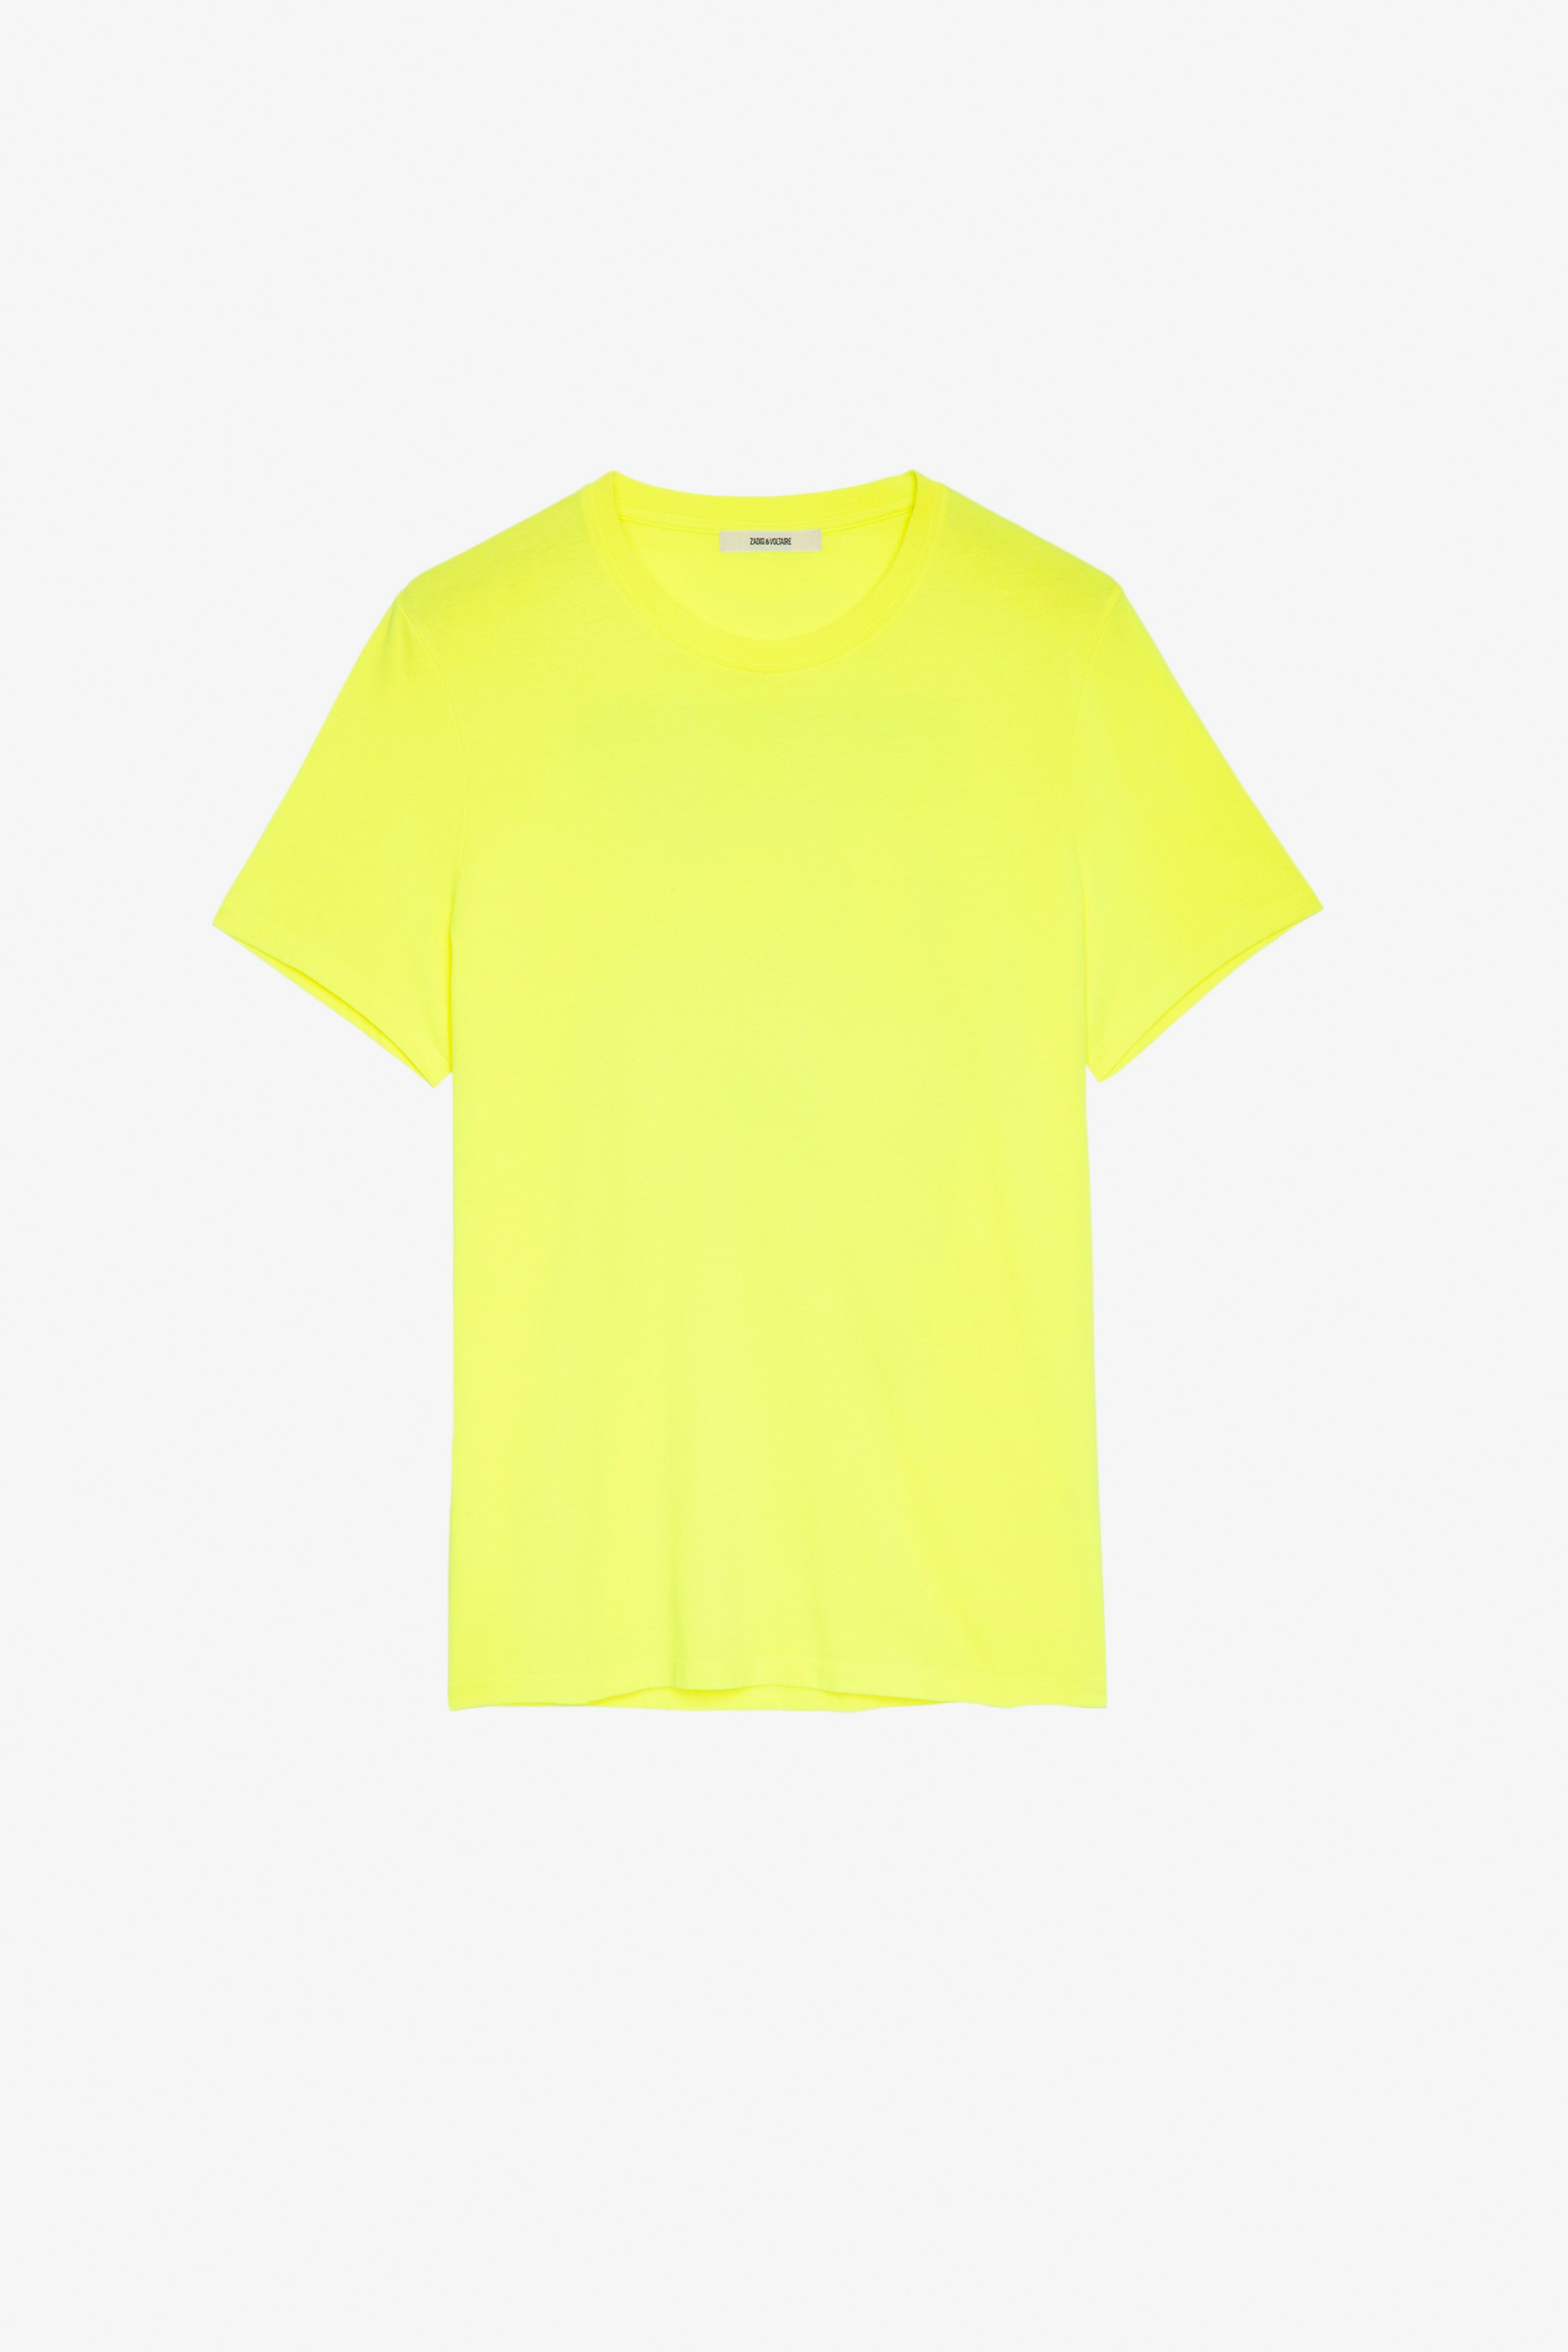 Ted T-Shirt イエローコットン 背面パームツリープリント Tシャツ メンズ